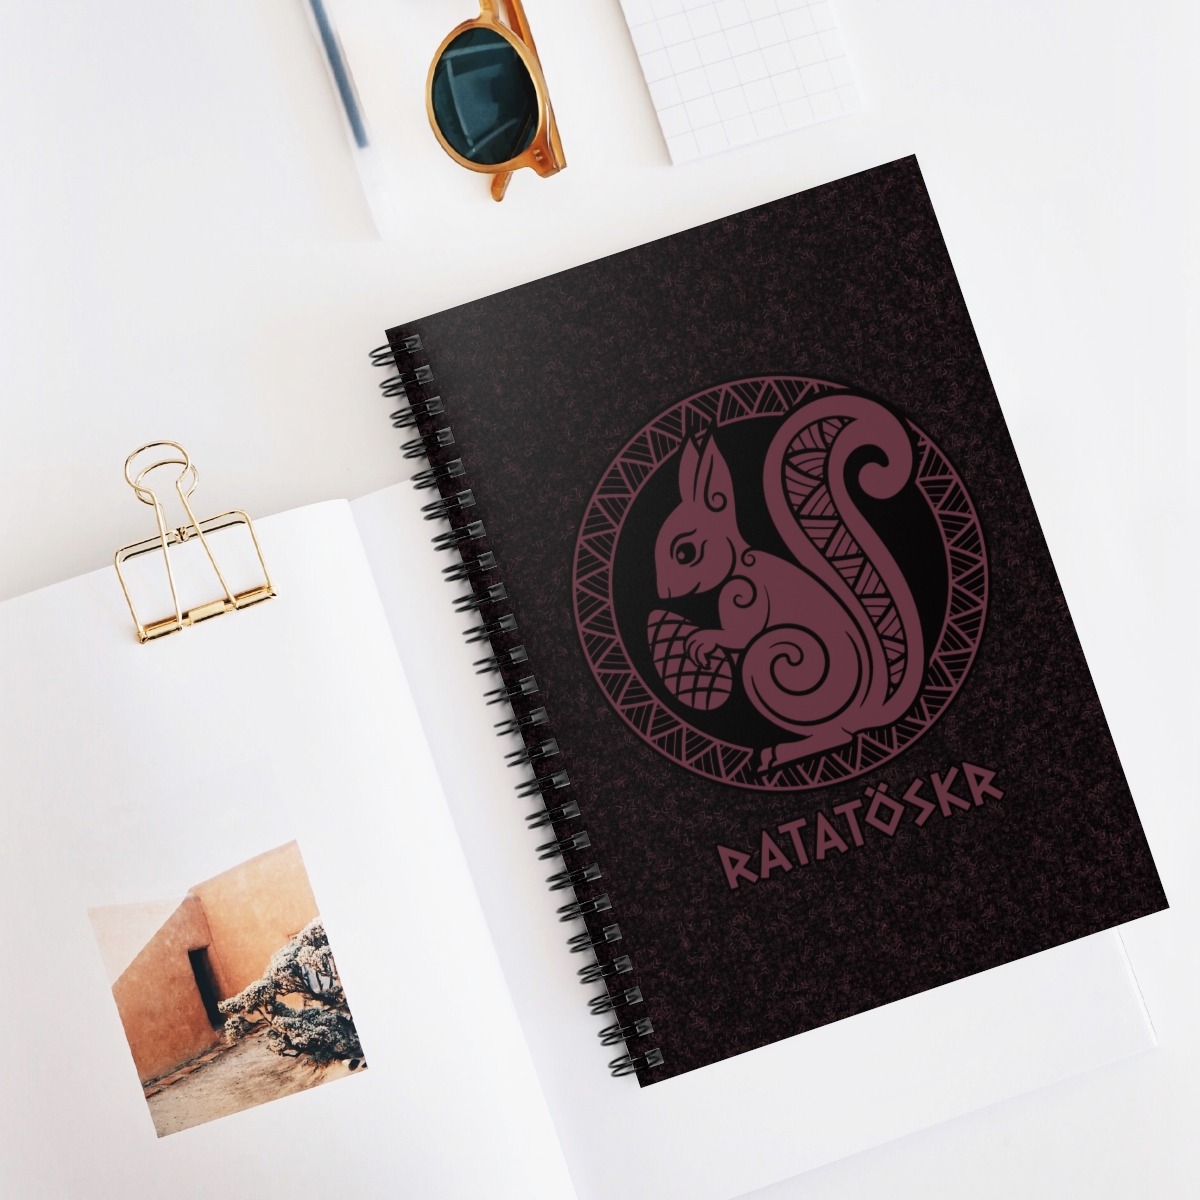 Maroon Ratatoskr Spiral Notebook